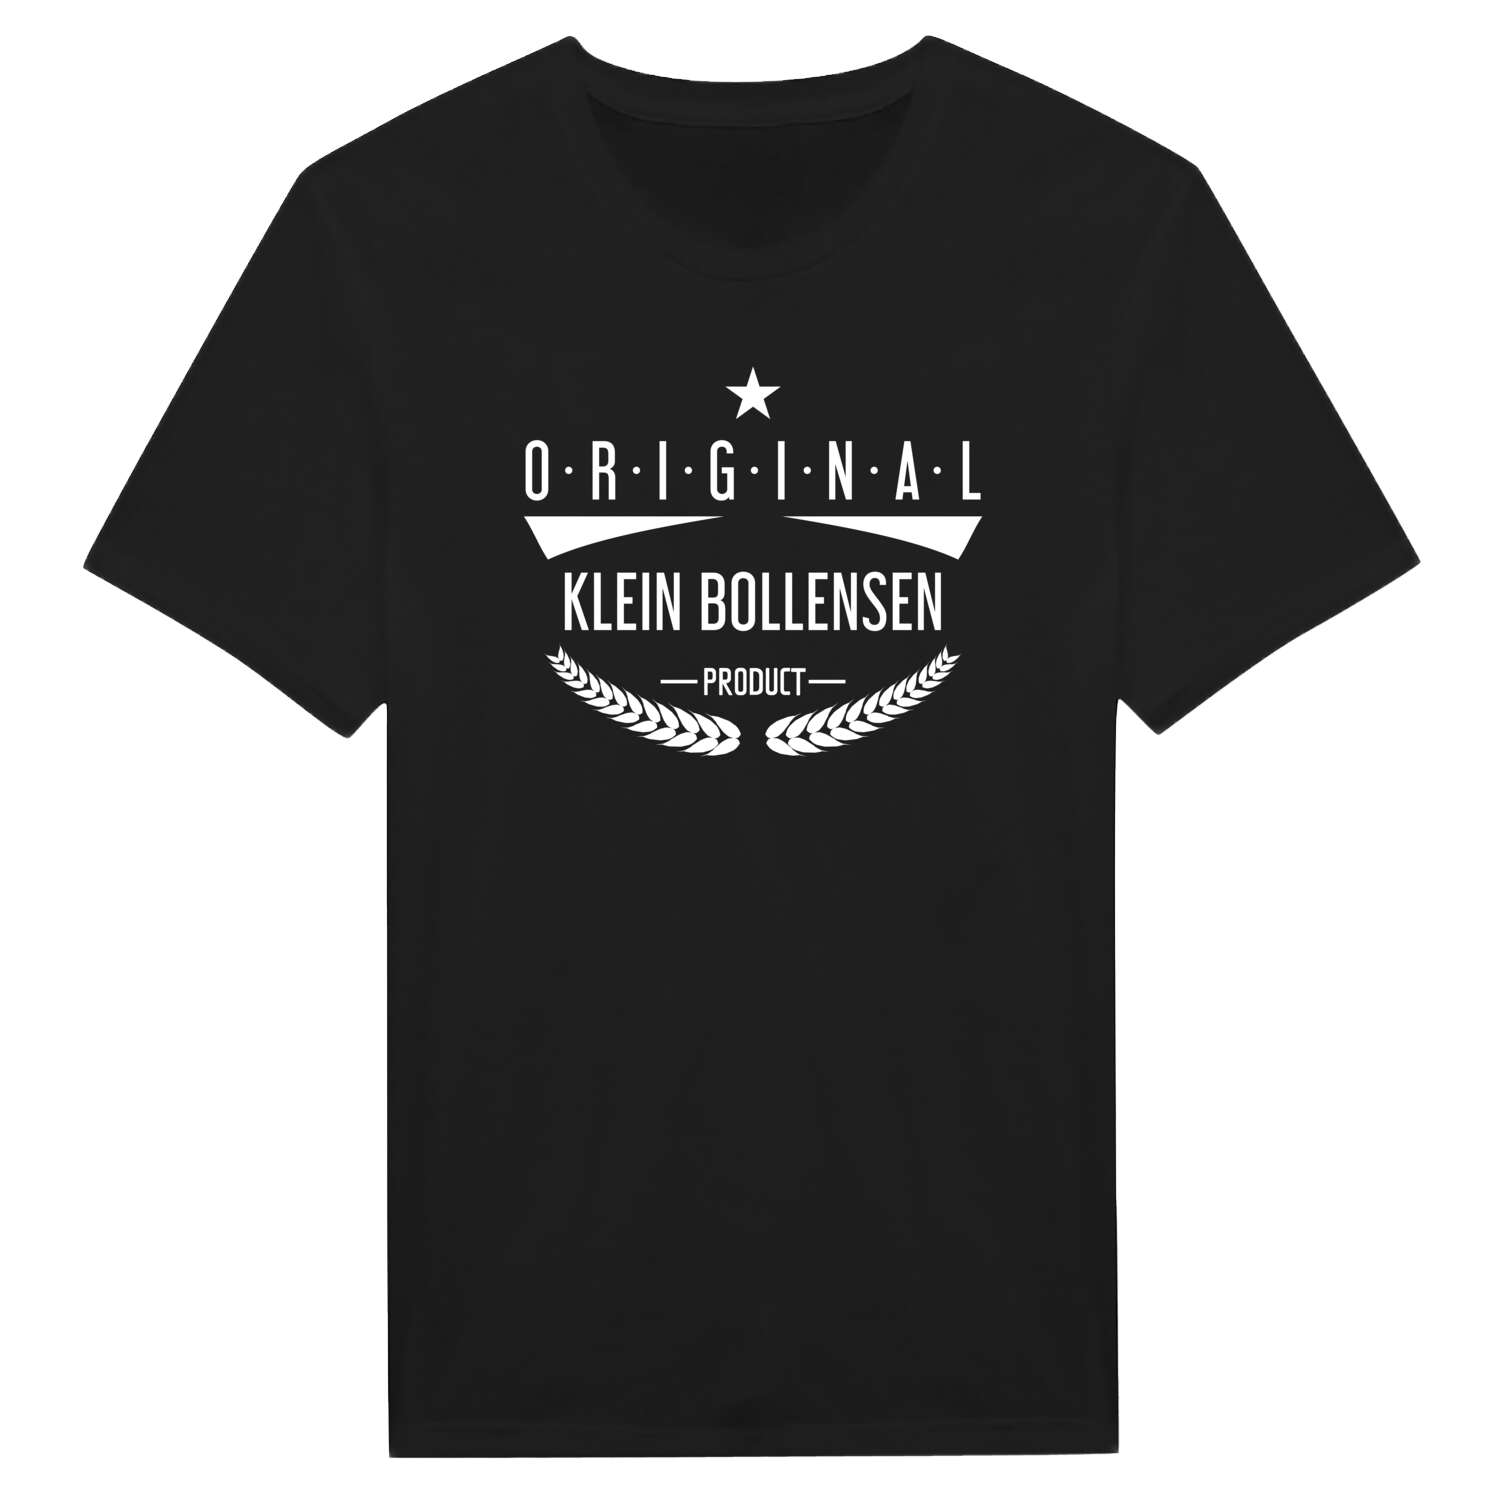 Klein Bollensen T-Shirt »Original Product«